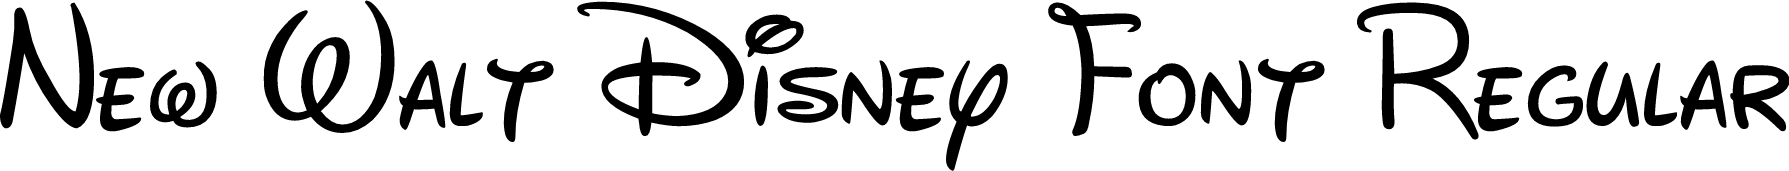 Featured image of post Disney Calligraphy Fonts - Walt disney font, svg font, svg alphabet, ttf included, alphabet letters, calligraphy printables, disney alphabet svg font, font svg, fonts.